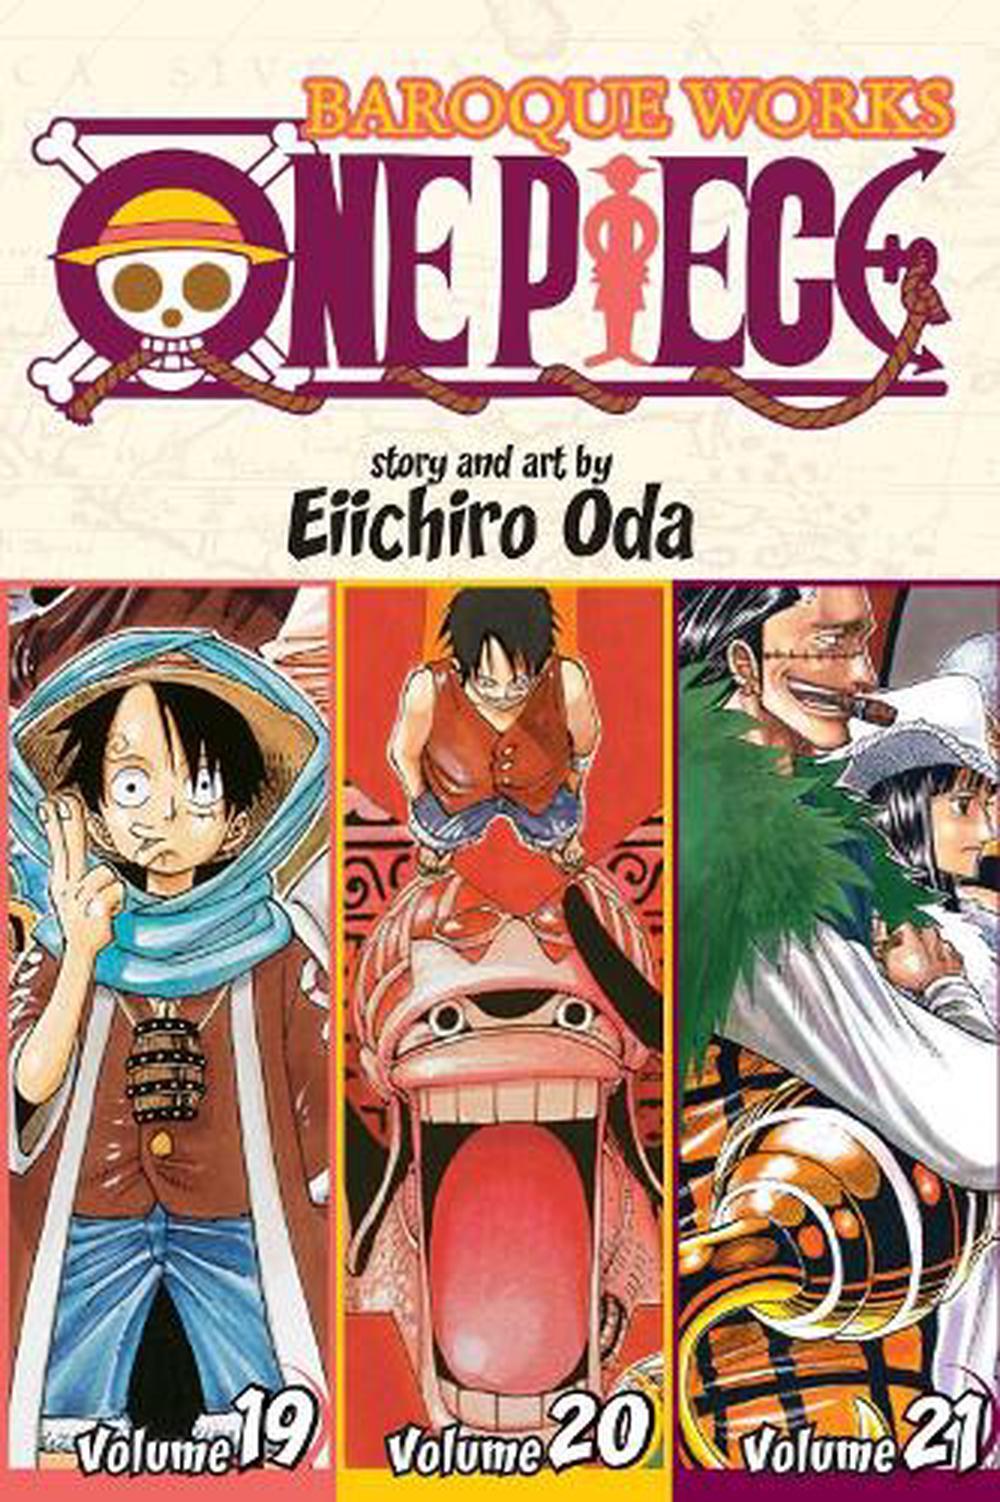 One Piece Color Walk Compendium: New World to Wano by Eiichiro Oda,  Hardcover